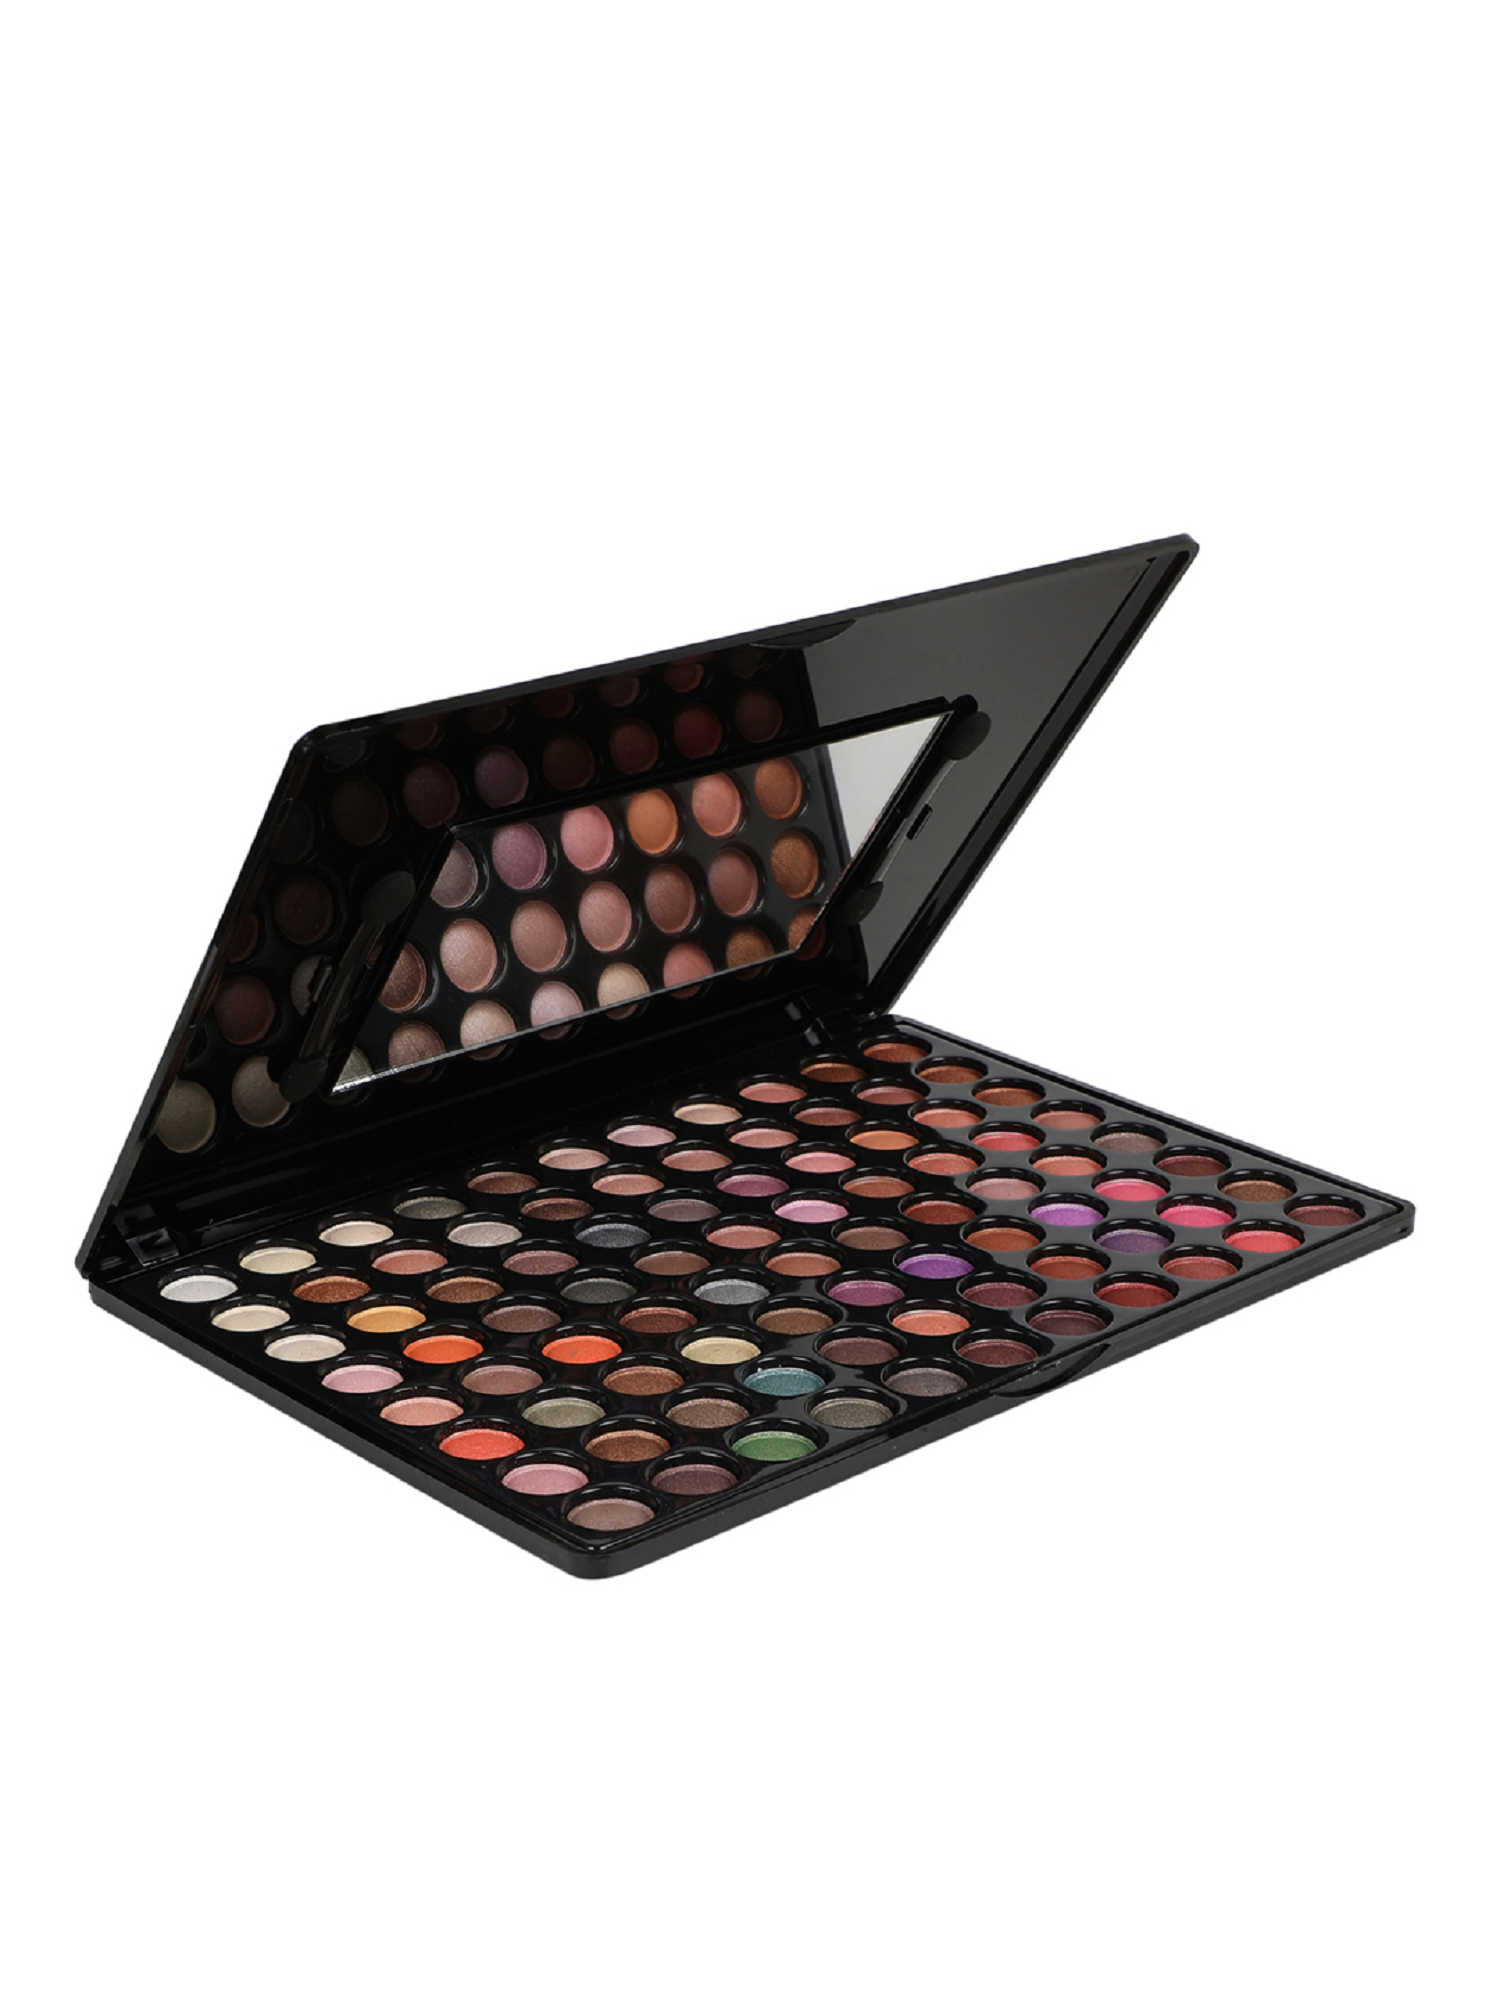 Sedel Professional Love Shimmer Matte Powder Makeup Eye Shadow Palette set of 88 Colors